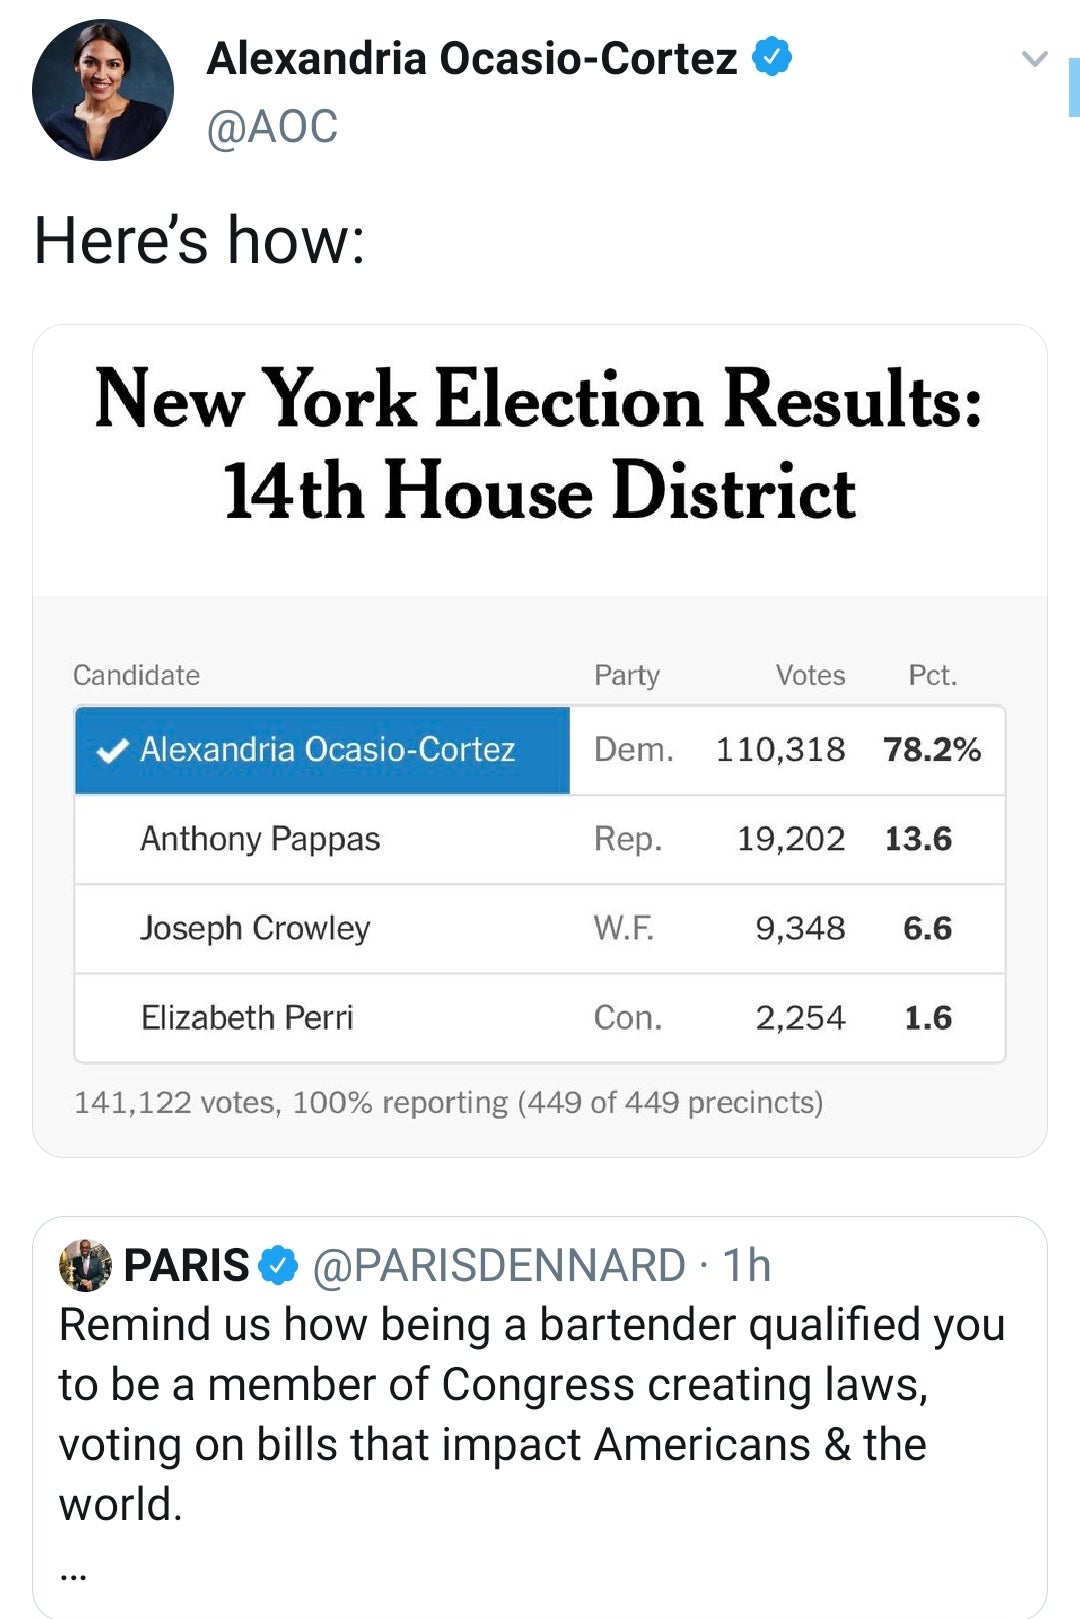 web page - Alexandria OcasioCortez Here's how New York Election Results 14th House District Candidate Party Votes Pct. Alexandria OcasioCortez Dem. 110,318 78.2% Anthony Pappas Rep. 19,202 13.6 Joseph Crowley W.F. 9,348 6.6 Elizabeth Perri Con. 2,254 1.6 